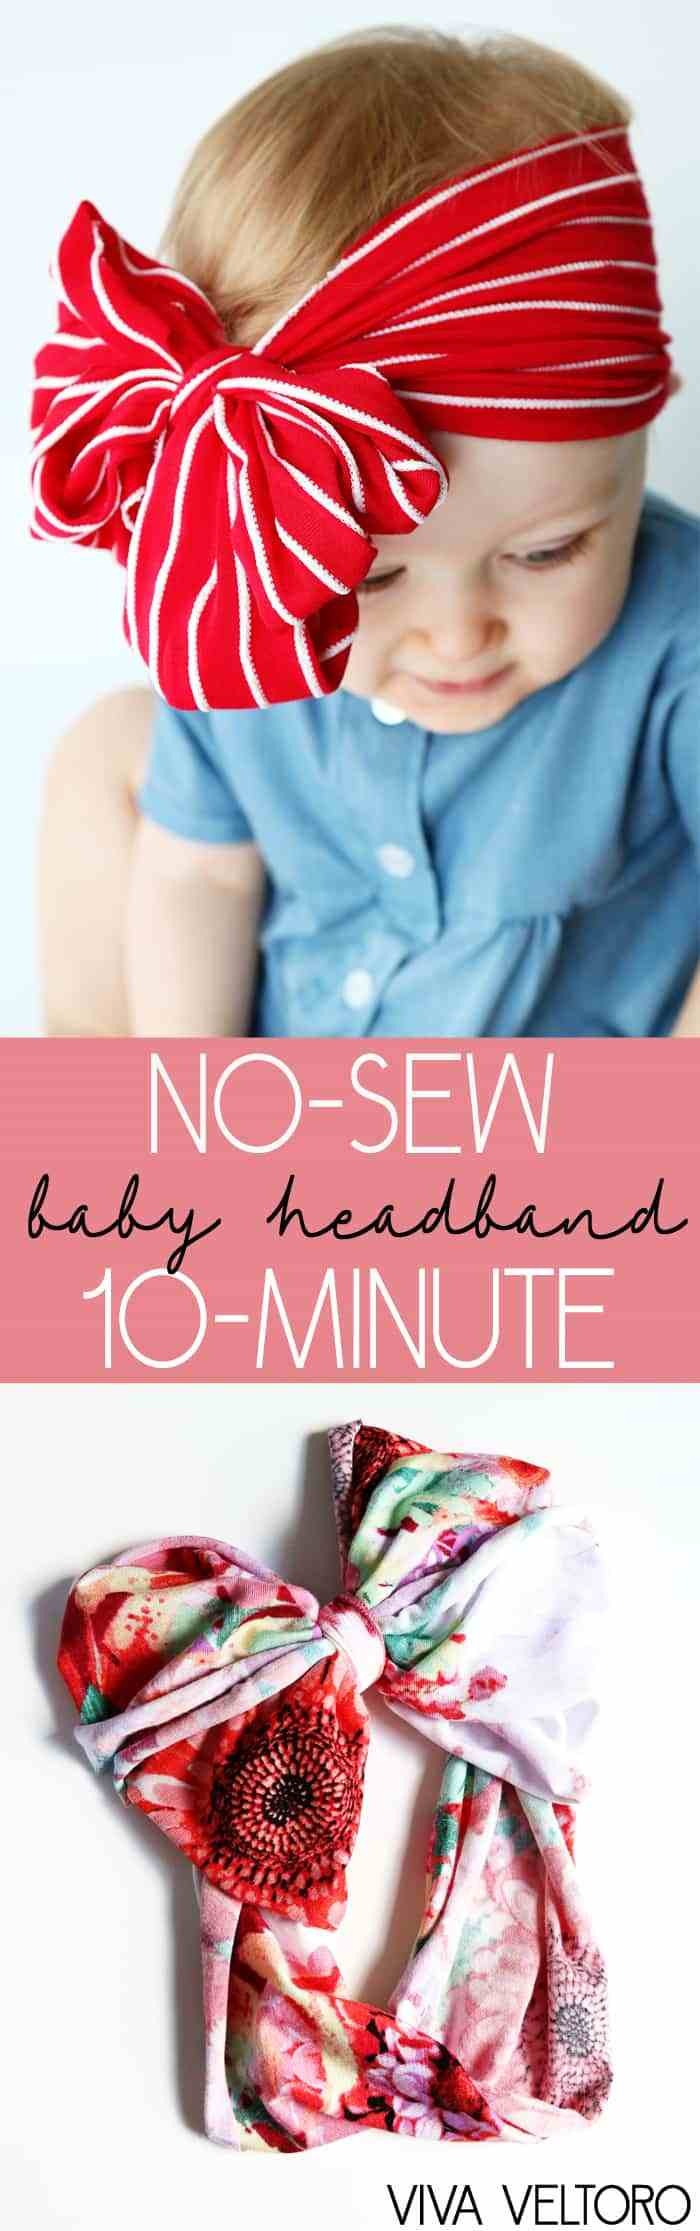 Best ideas about DIY Baby Headbands No Sew
. Save or Pin 10 Minute DIY No Sew Baby Headband Viva Veltoro Now.